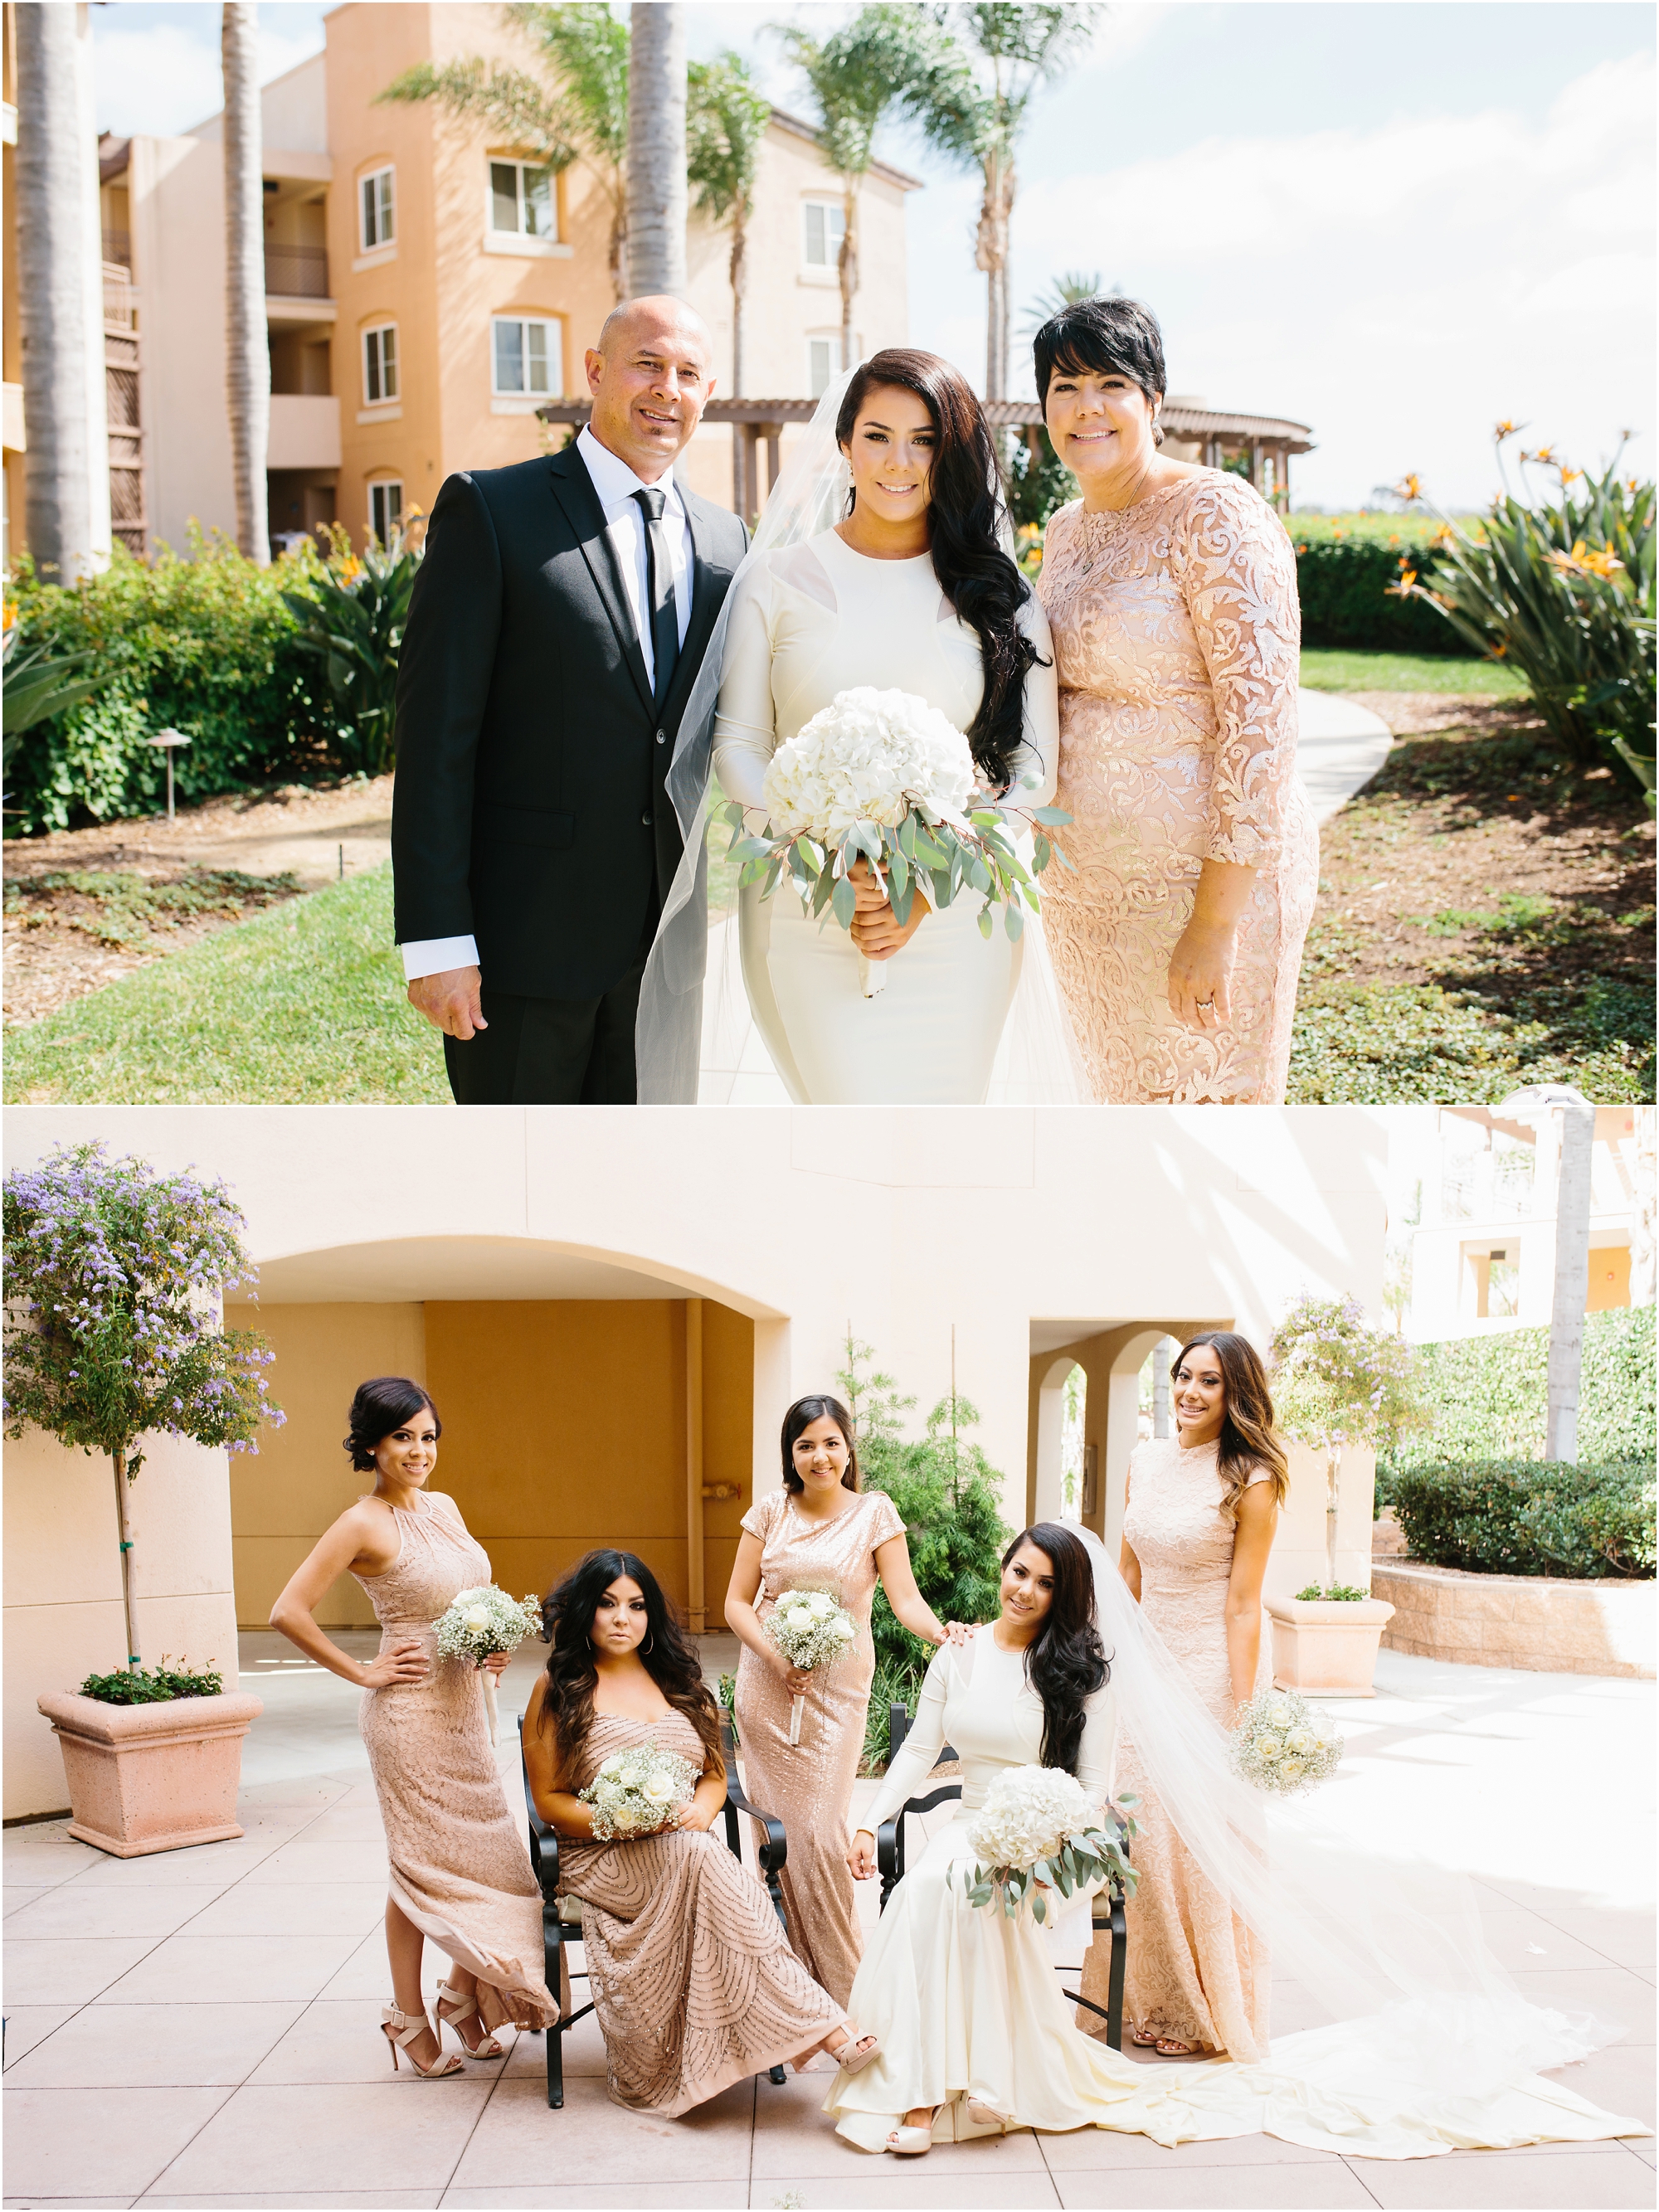 Carlsbad San Diego Wedding - https://brittneyhannonphotography.com